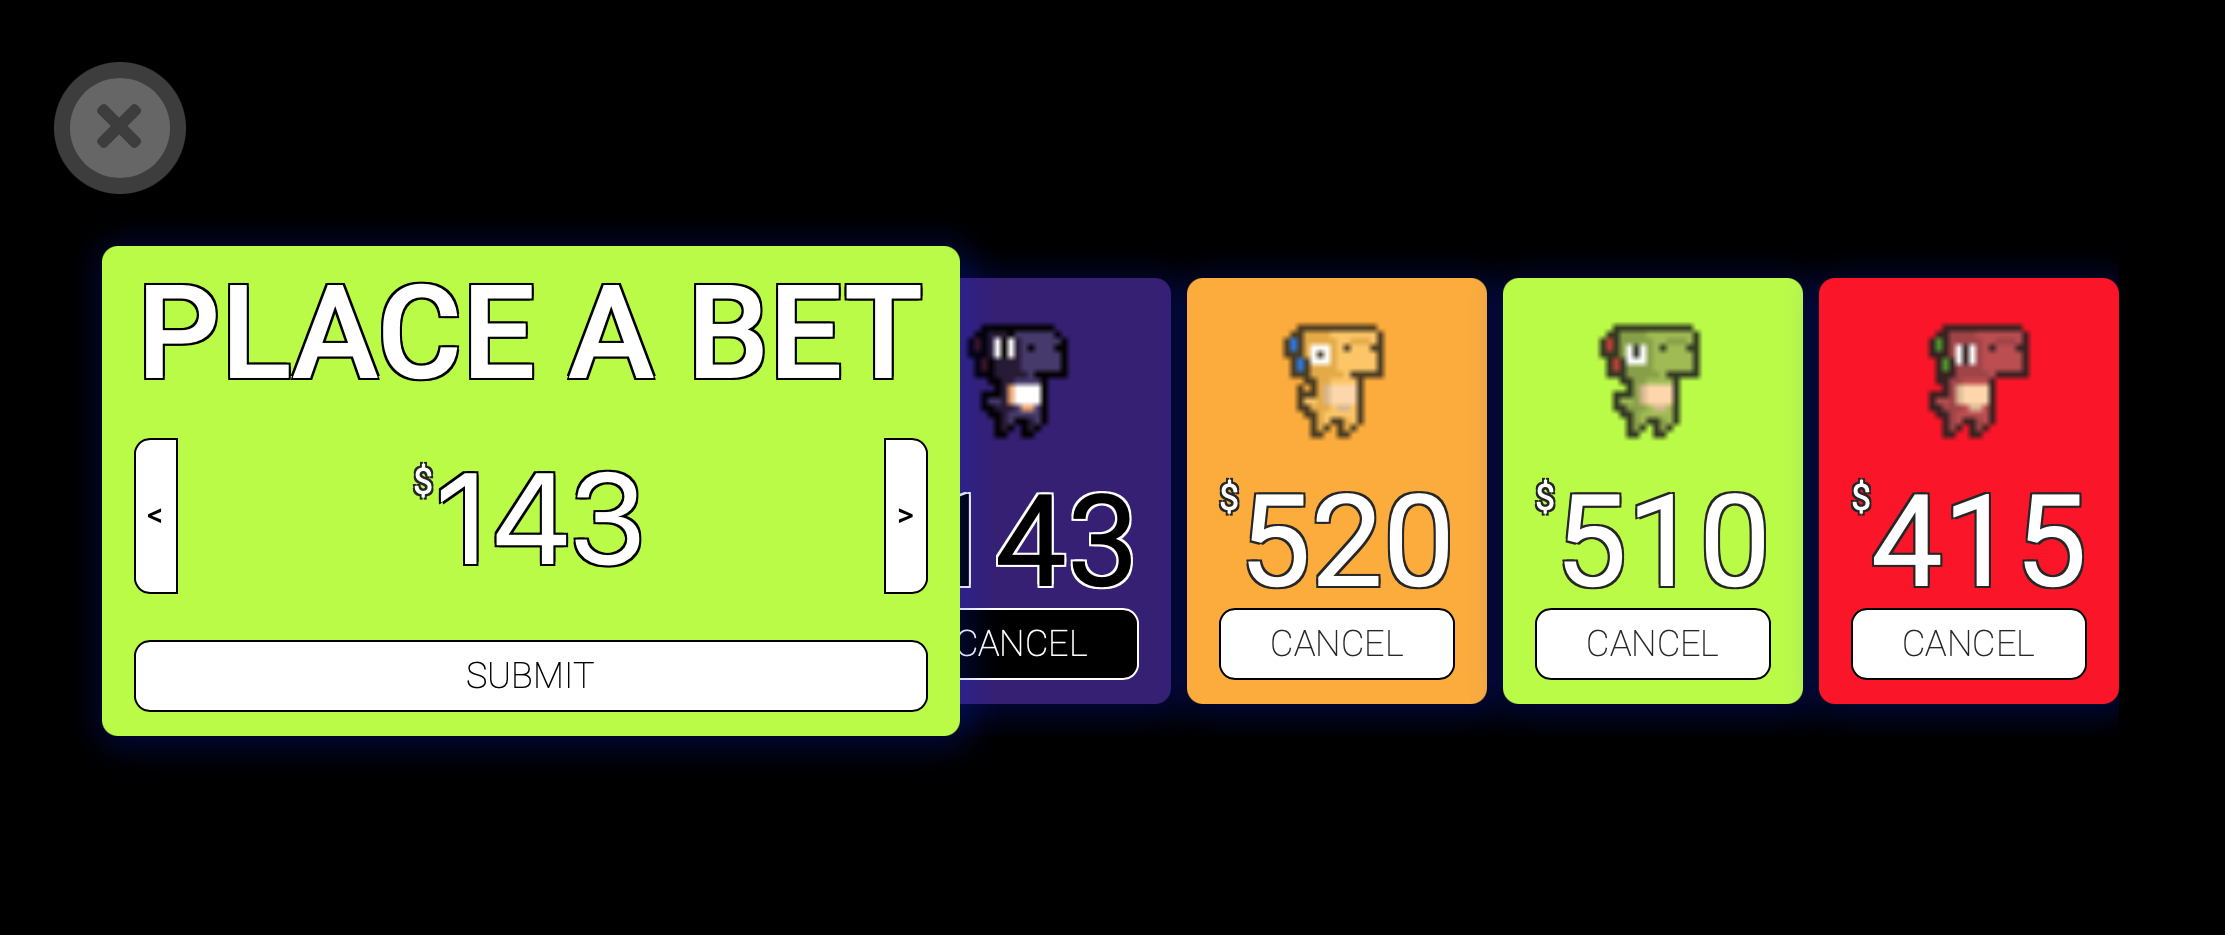 Betting interface